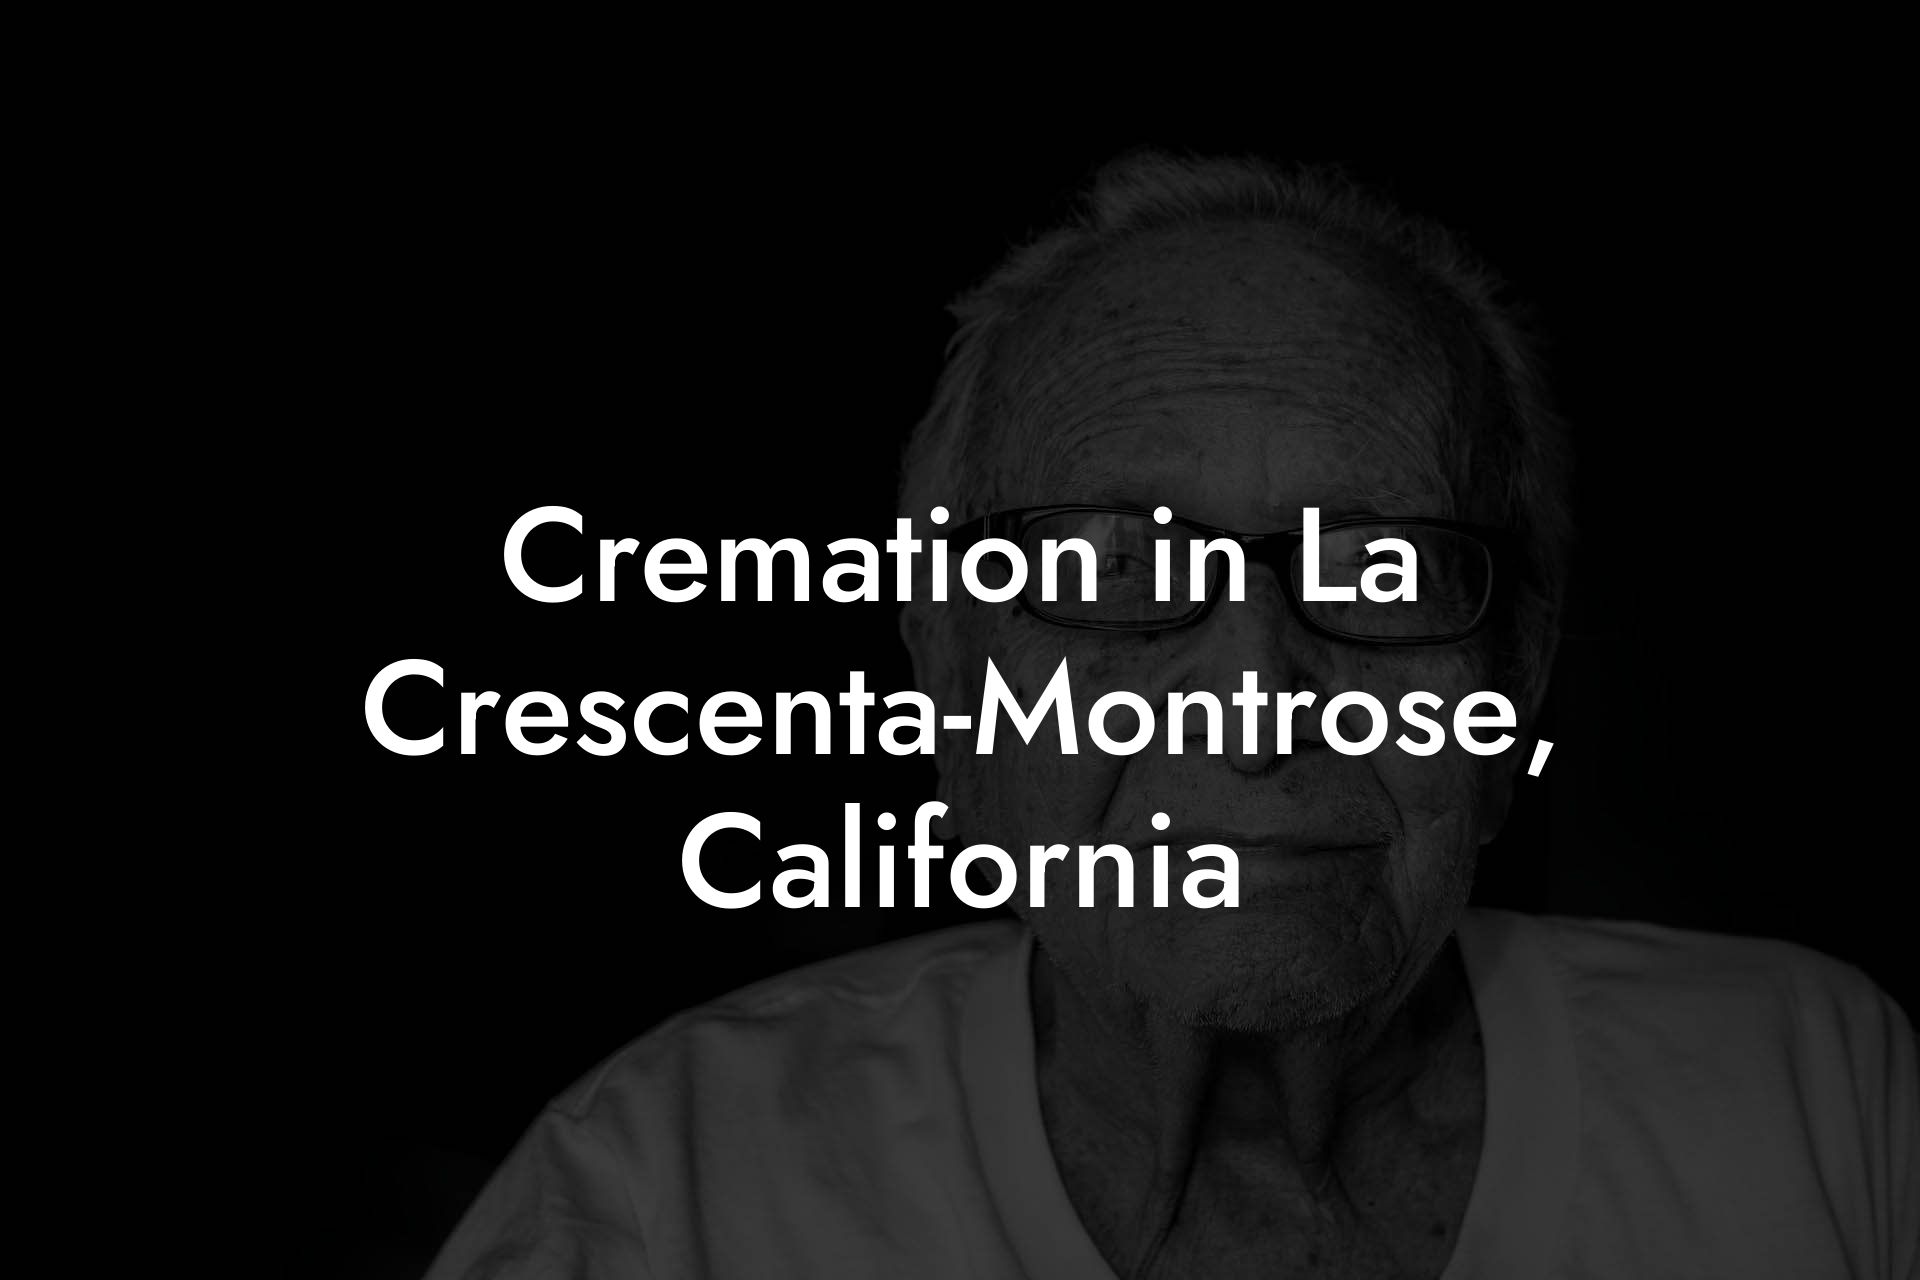 Cremation in La Crescenta-Montrose, California